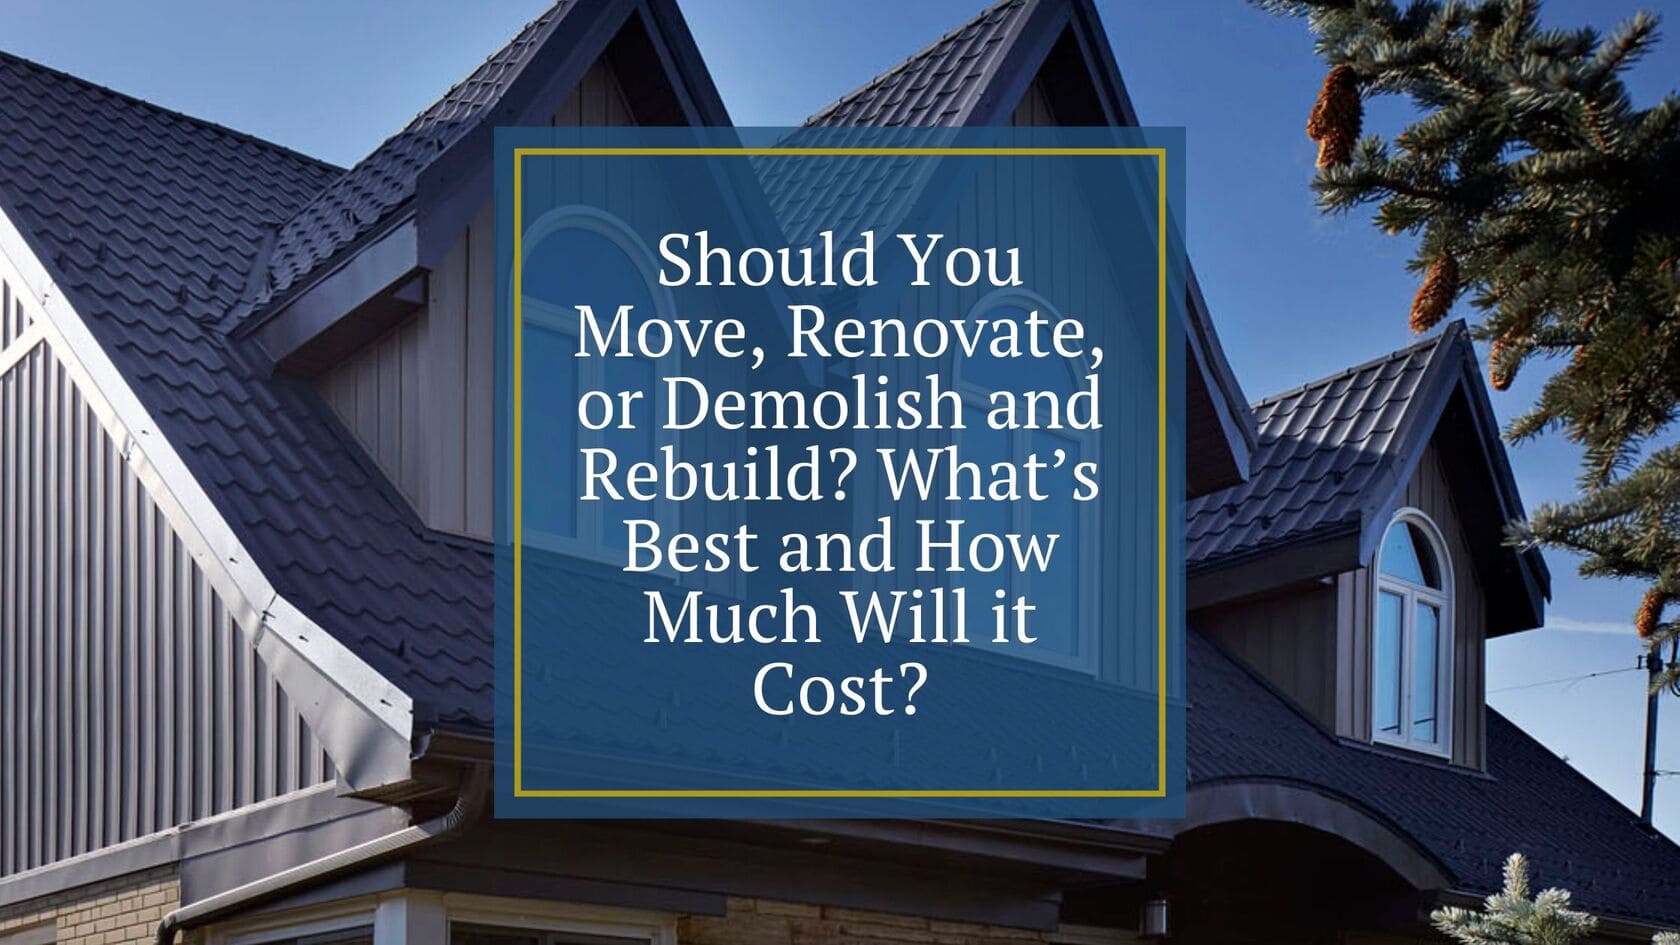 Should You Move, Renovate, or Demolish and Rebuild?